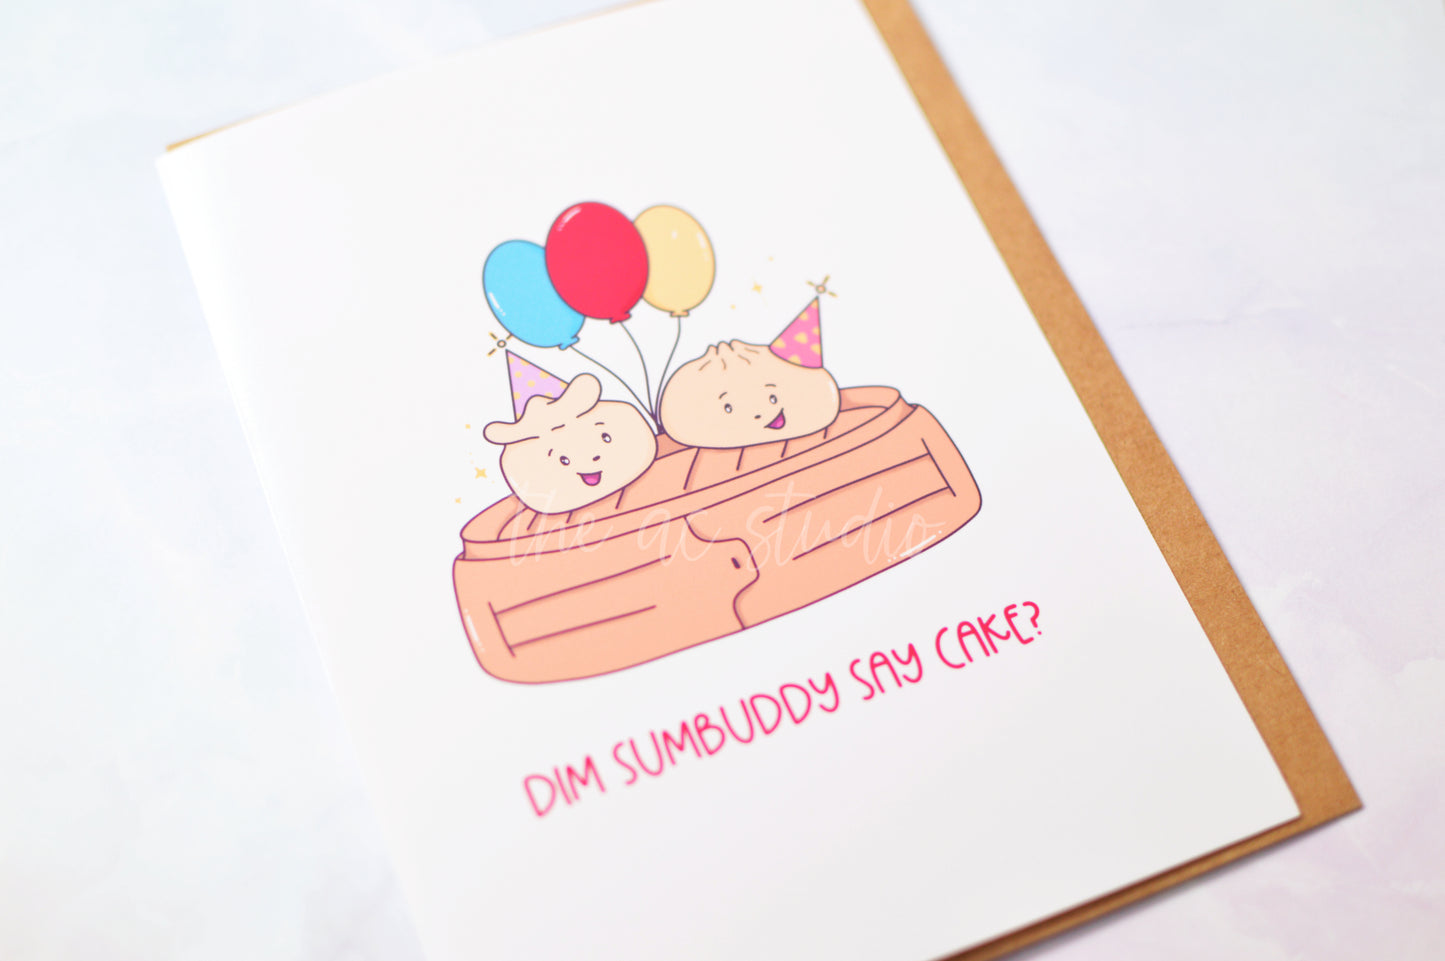 Dim Sumbuddy Say Cake Greeting Card